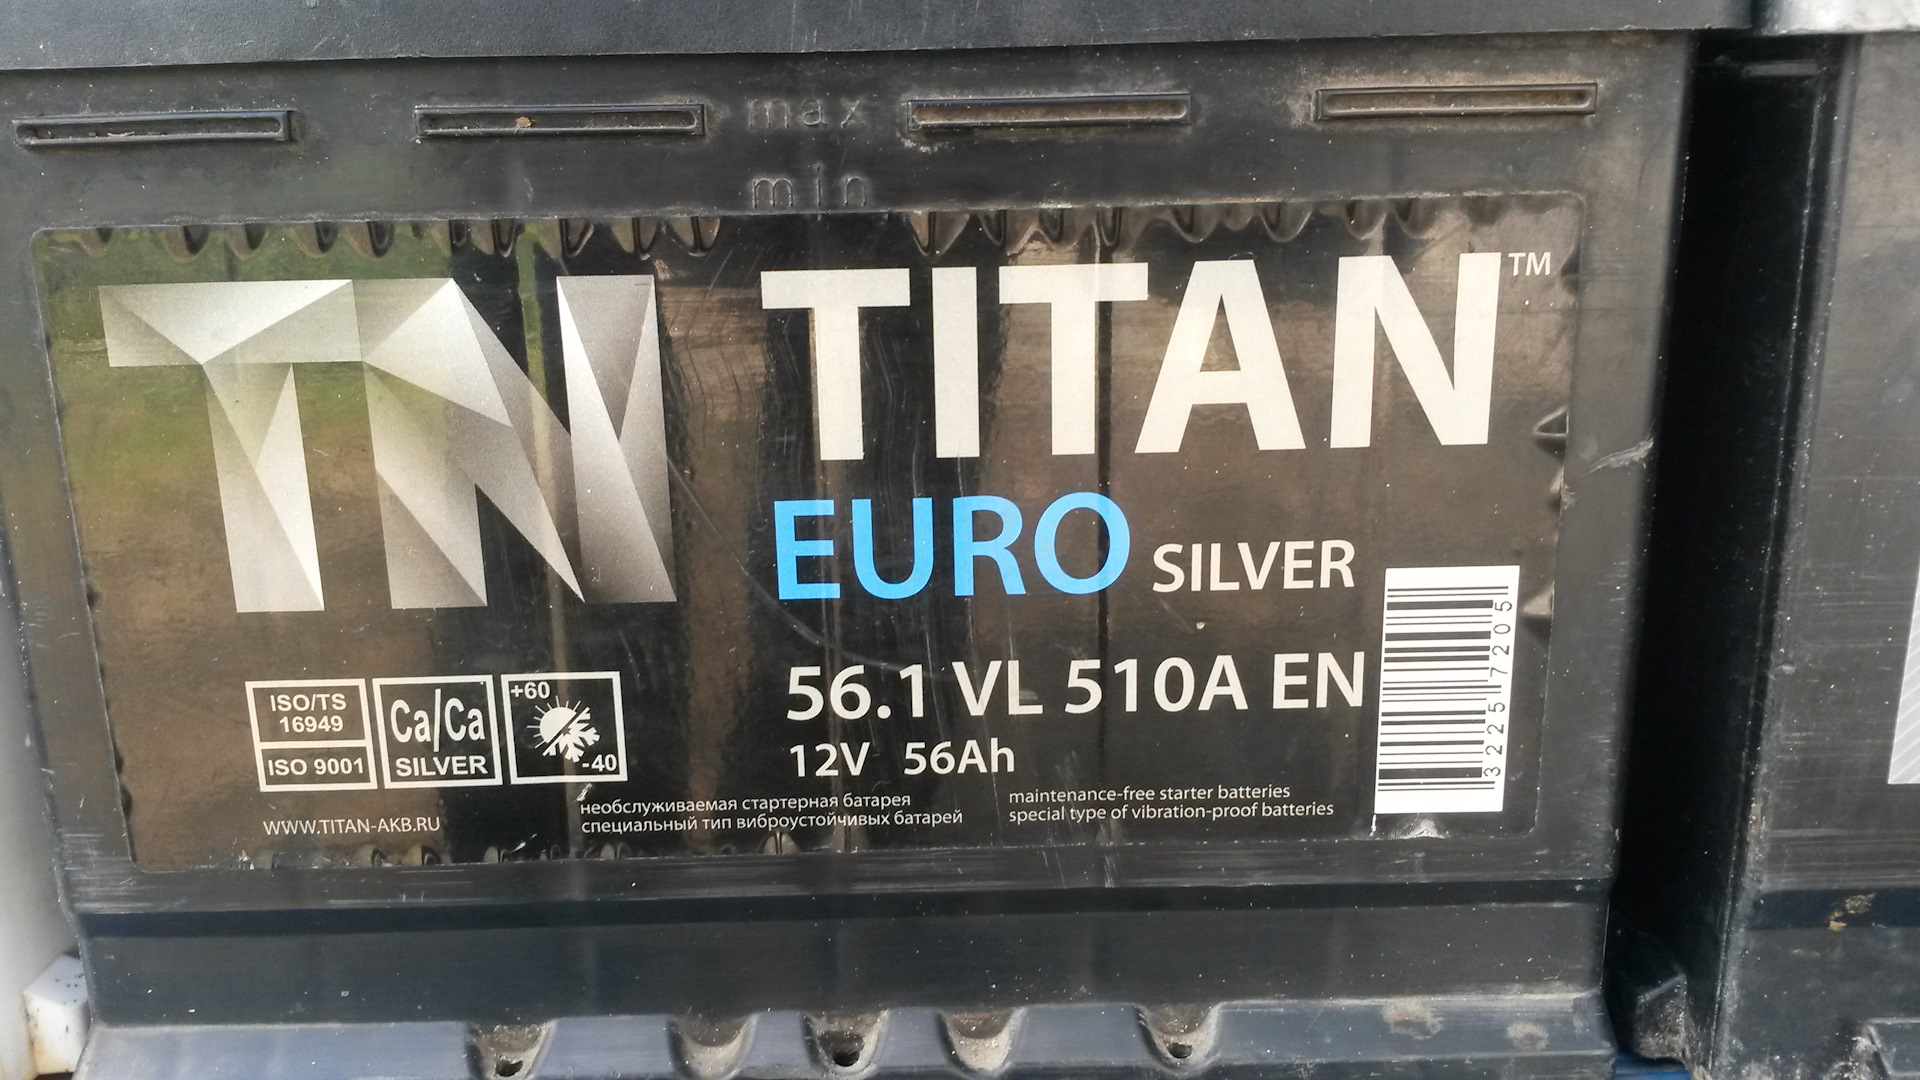 Titan Euro Silver 61.1. Аккумулятор Титан евро Сильвер 61.1. АКБ Титан 72. Titan аккумулятор плакаты.